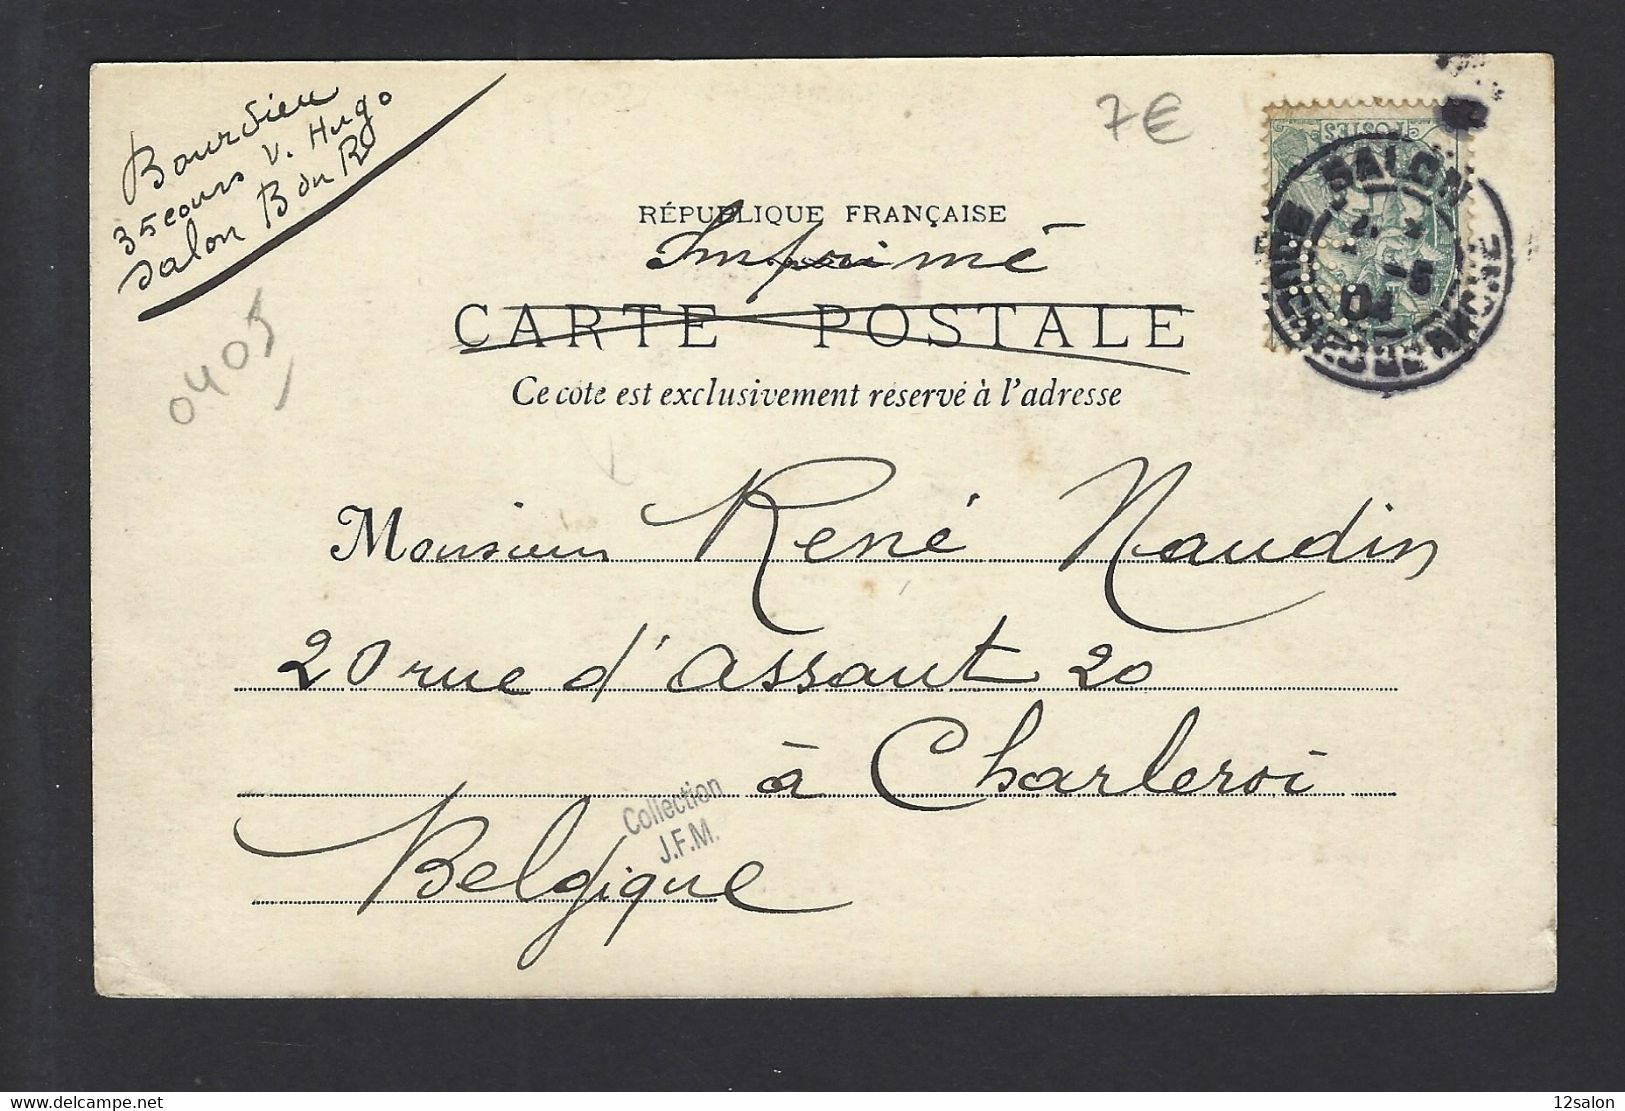 Carte De FRANCE SALON DE PROVENCE Perforée MG 1904 - 1877-1920: Semi-Moderne